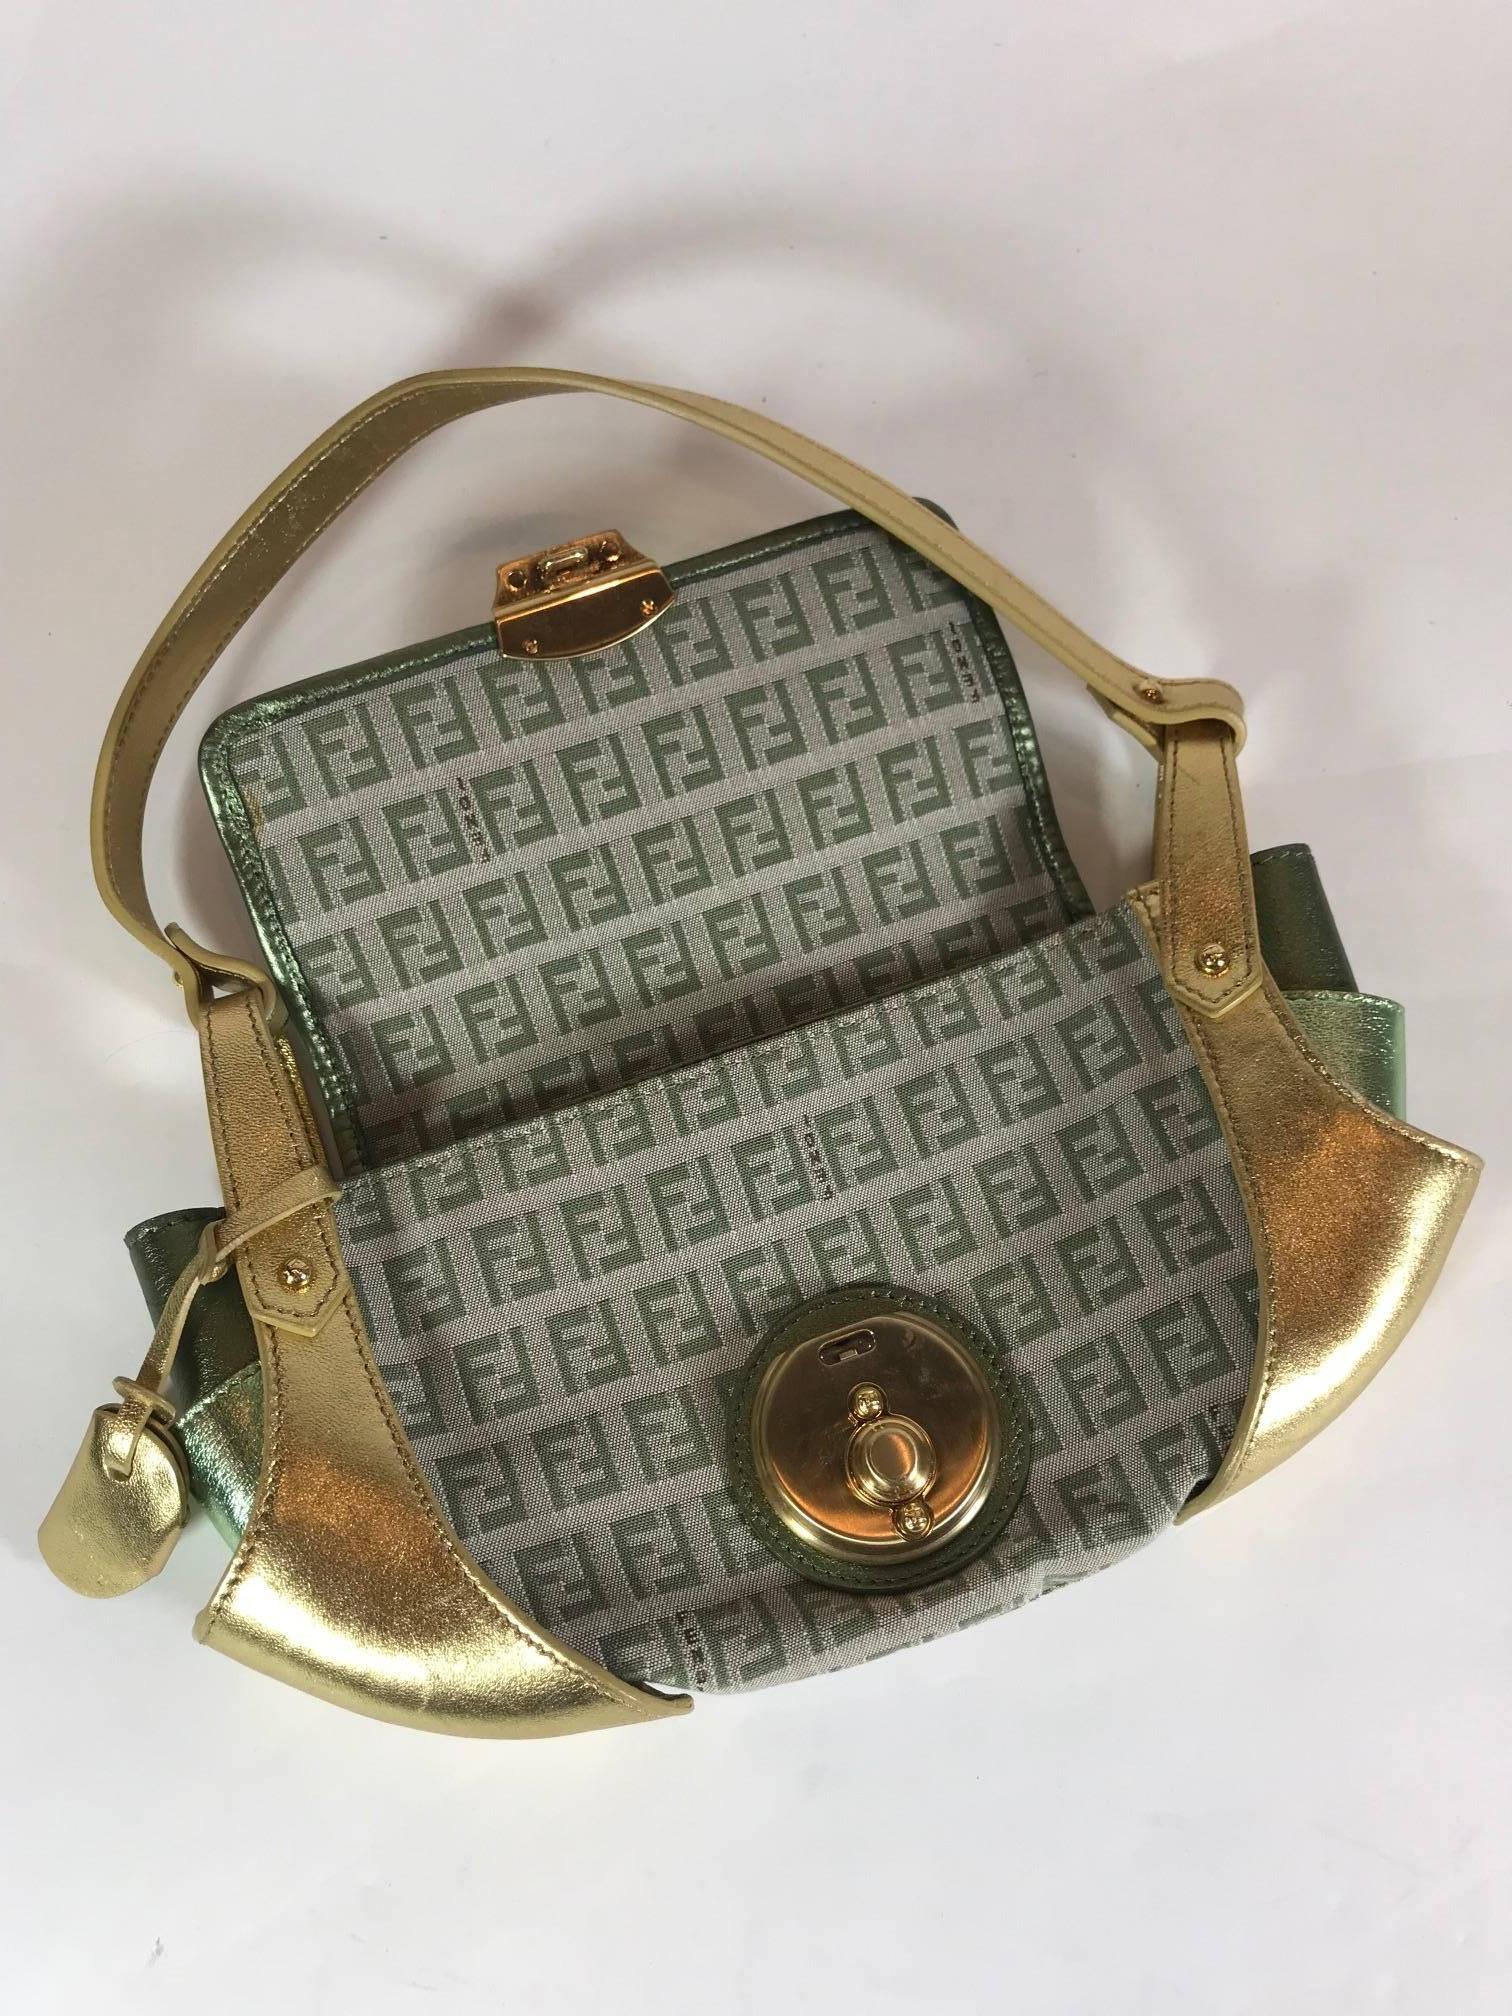 Fendi Gold and Green Metallic Handbag For Sale 4